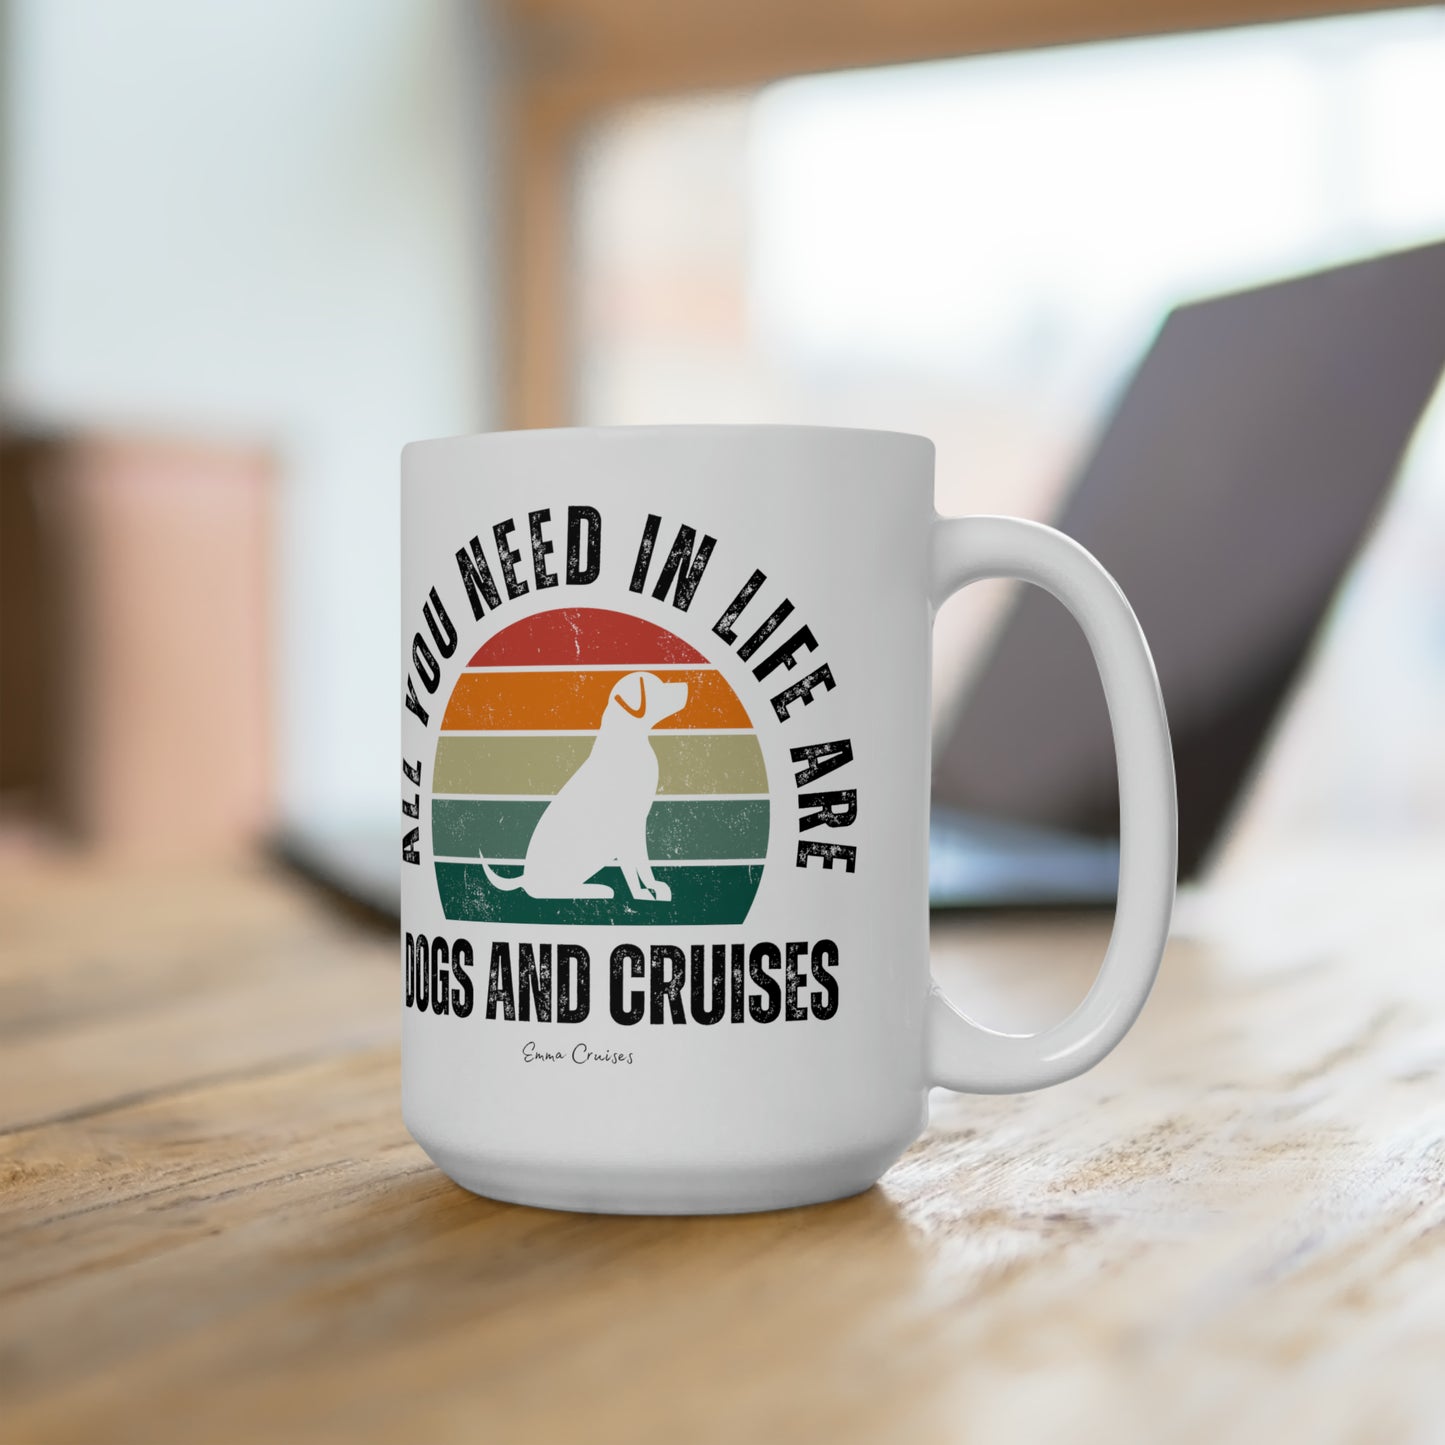 Dogs and Cruises - Ceramic Mug